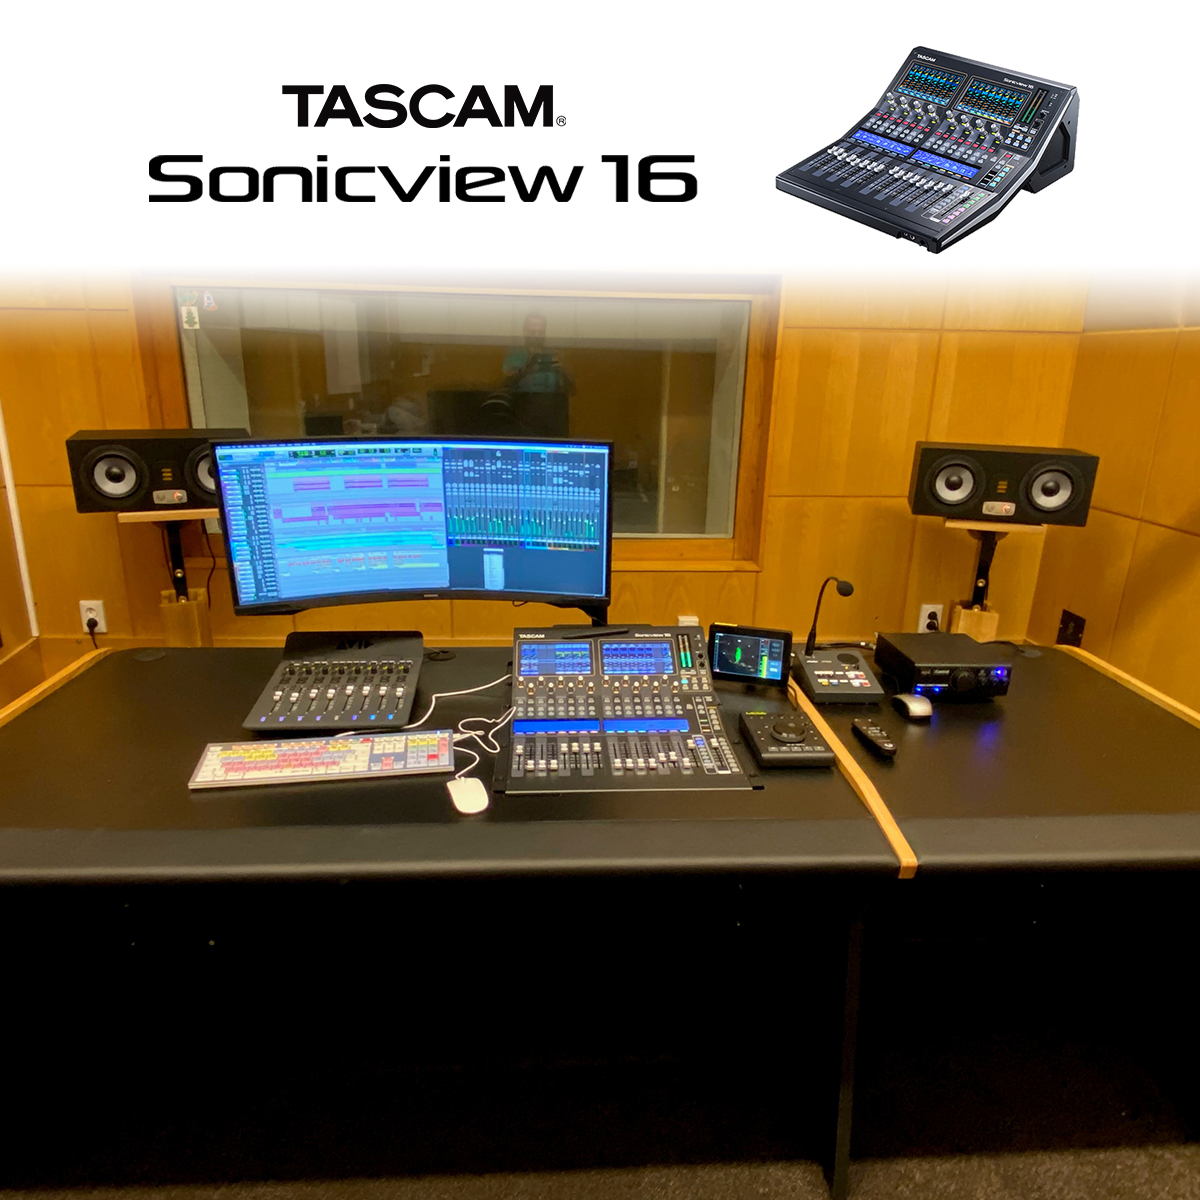 In Perfect Harmony: TASCAM Sonicview 16 at RTVS Studio, Banská Bystrica, Slovakia